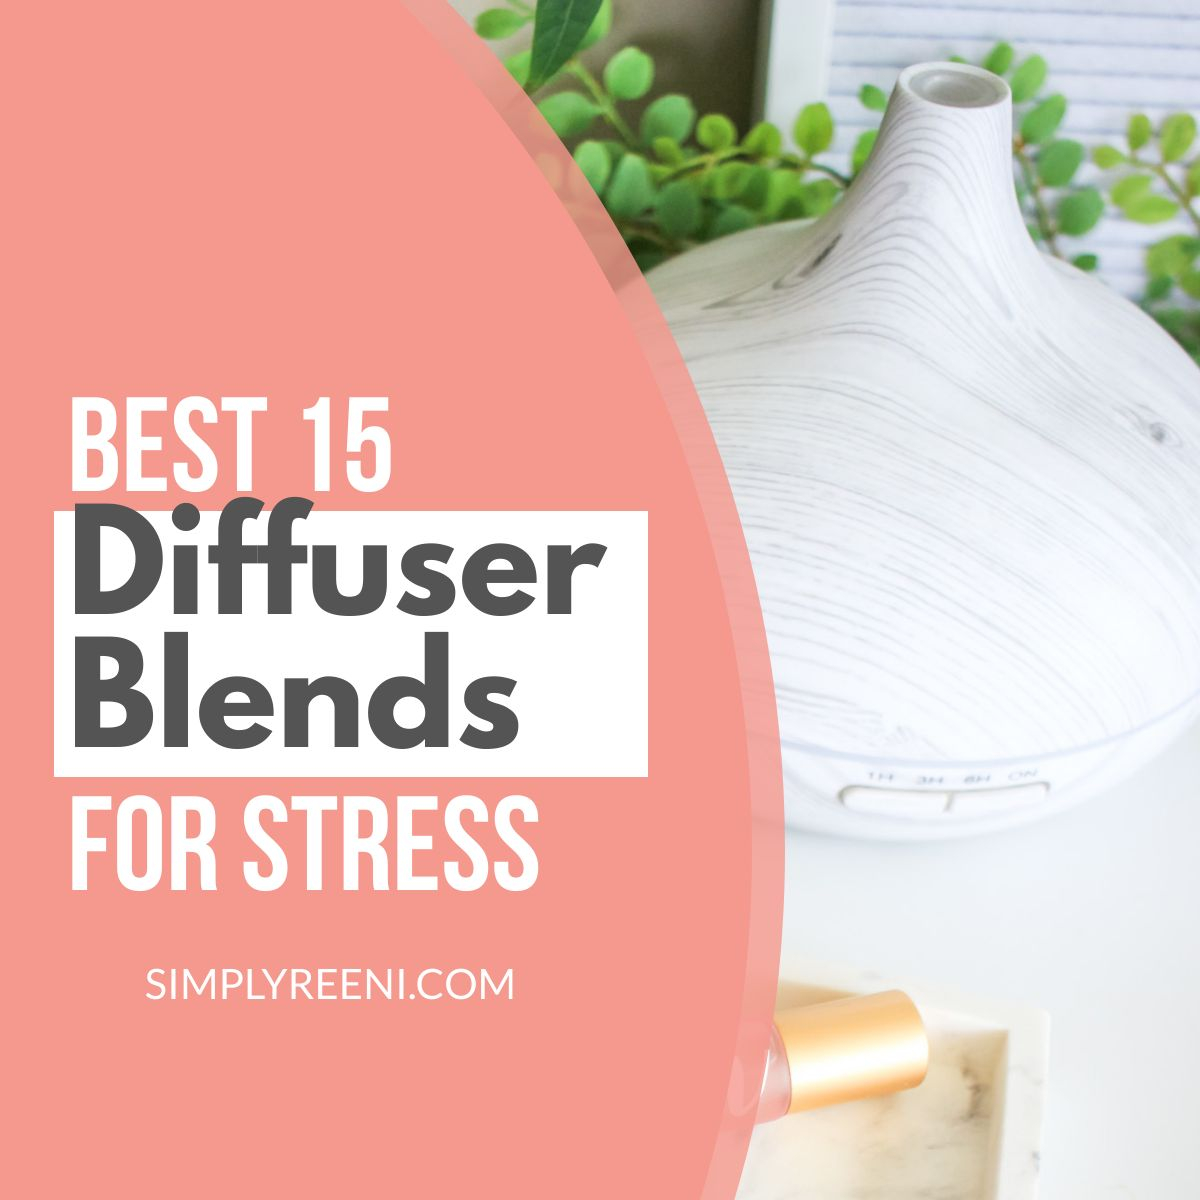 Best 15 Diffuser Blends for Stress